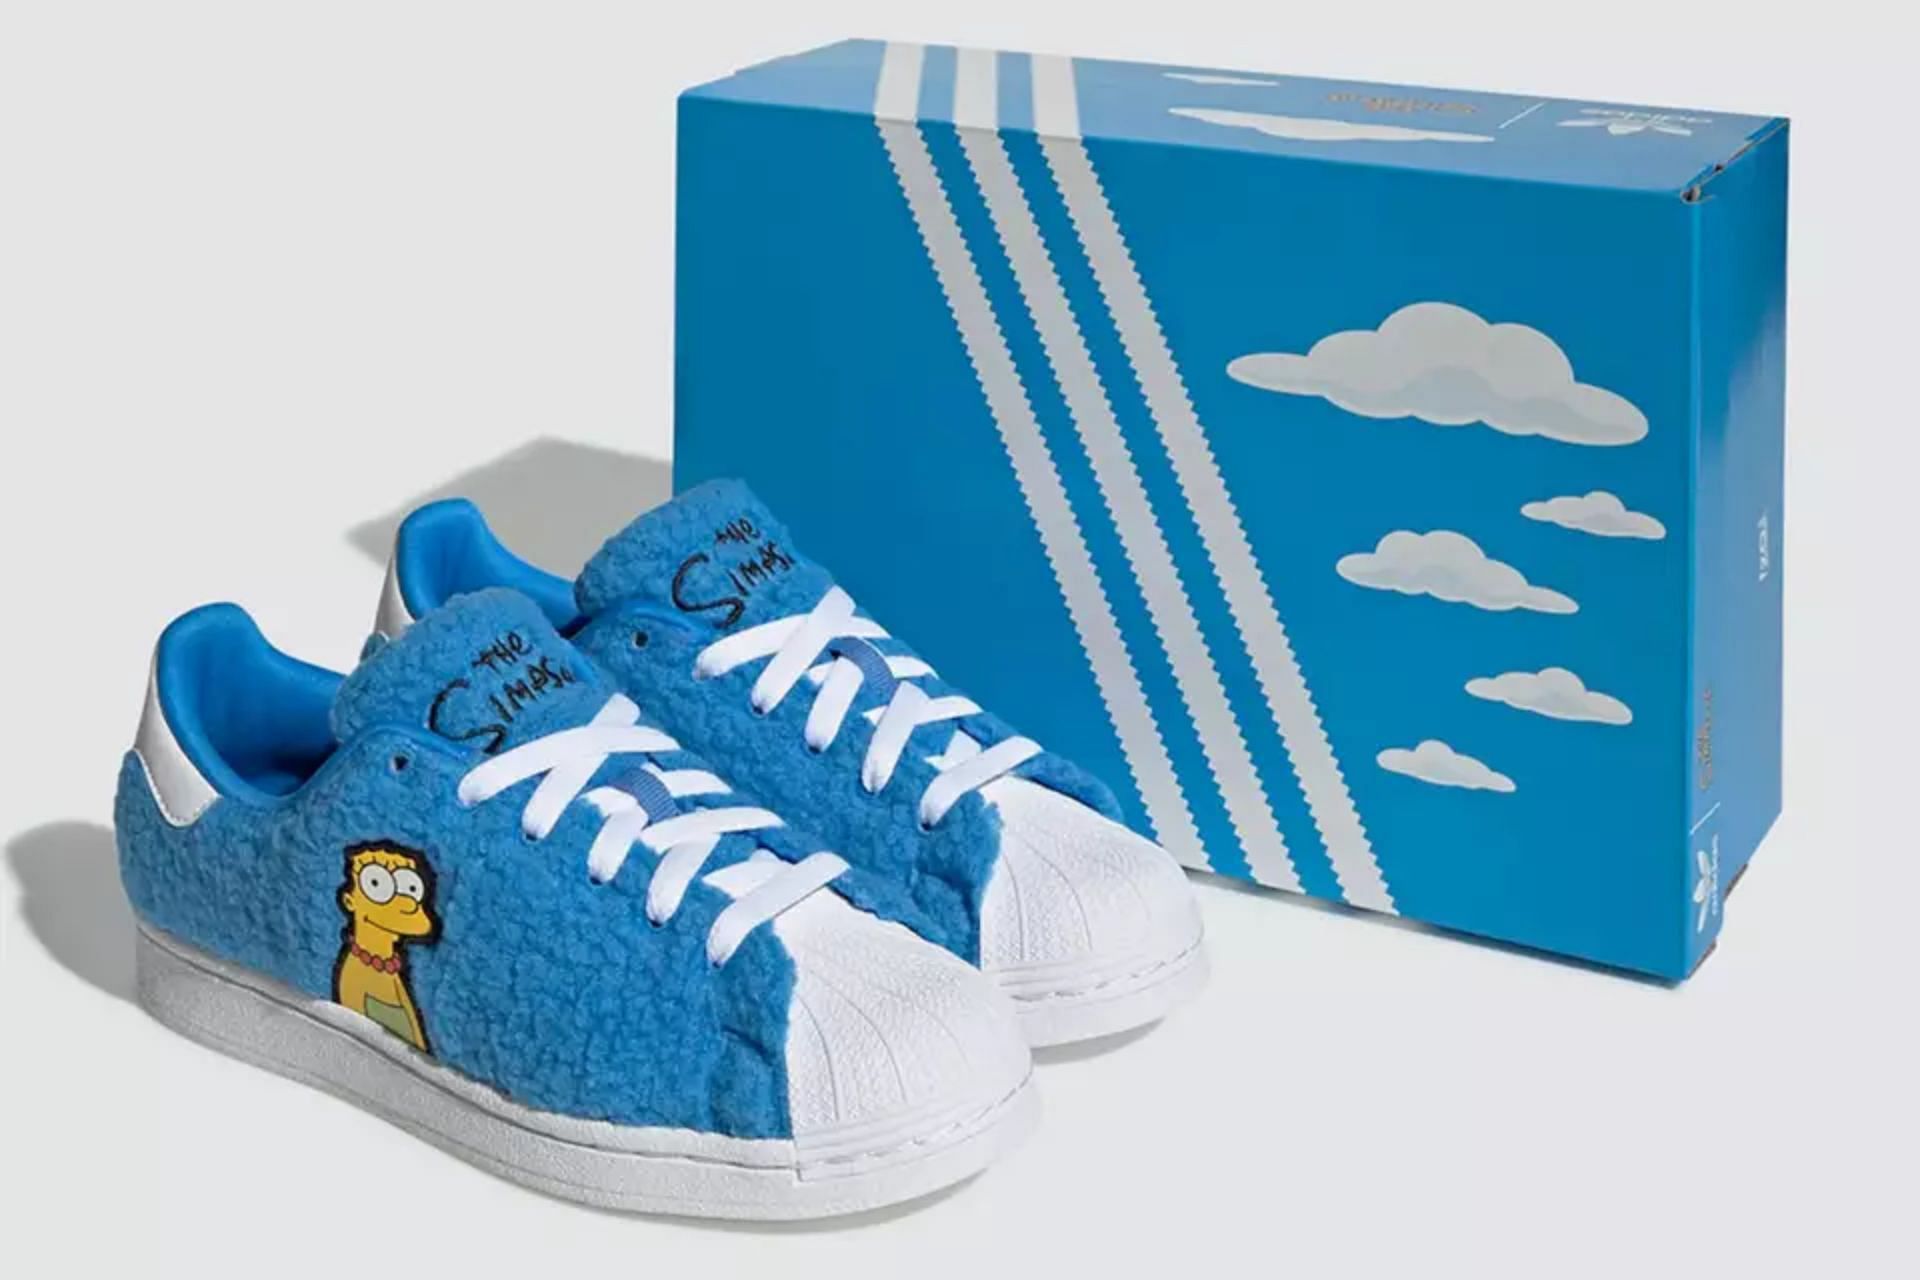 The Simpsons x Adidas Superstar sneakers (Image via Adidas)